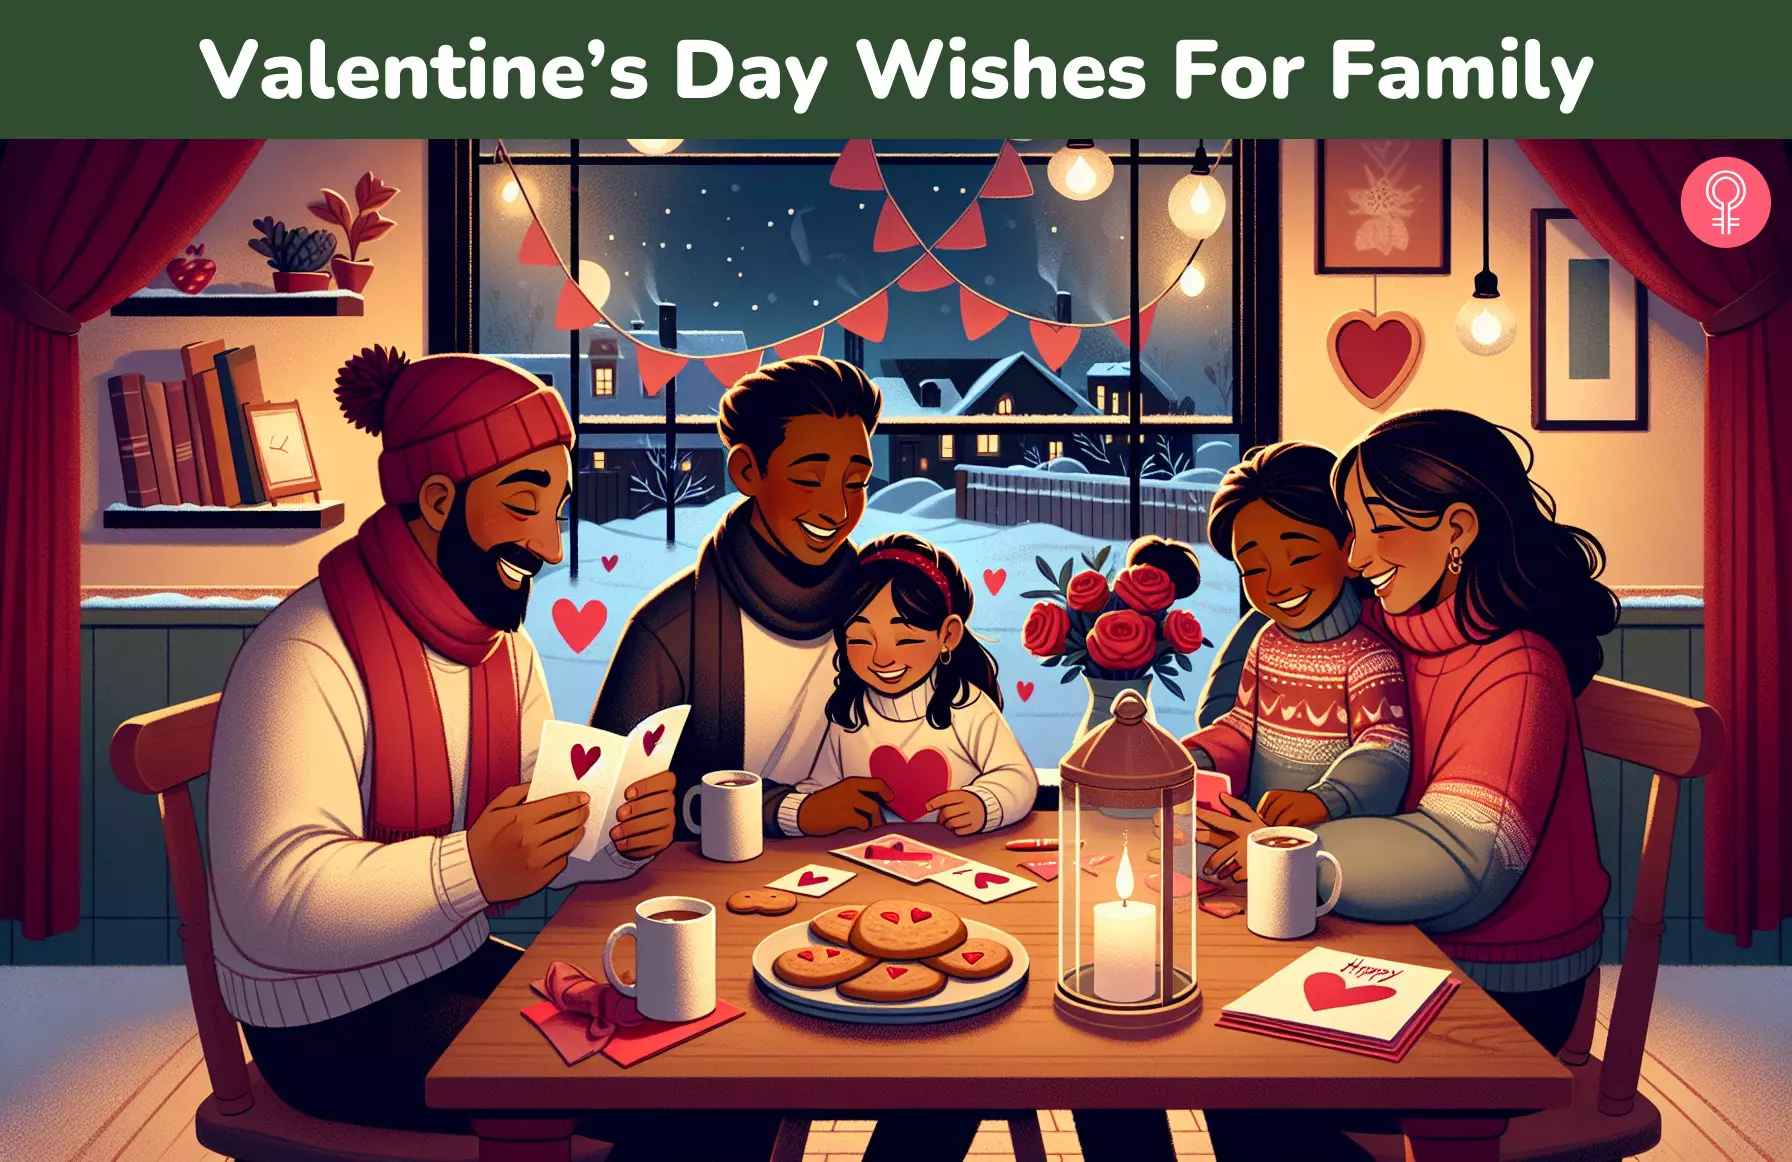 valentine wishes for family_illustration